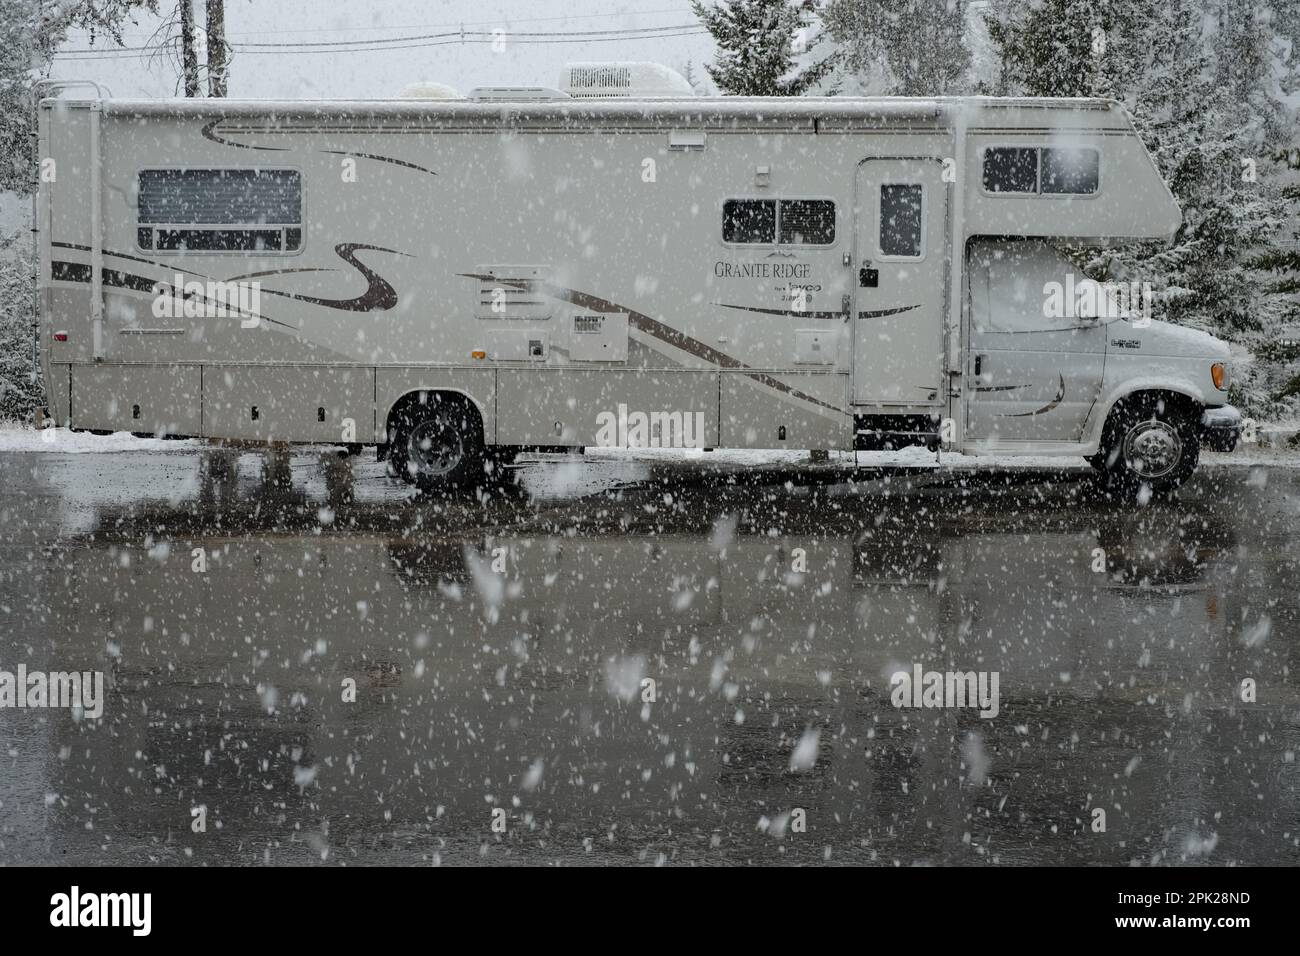 Campingplatz für Wohnmobile, Banff, Alberta, Kanada Stockfoto